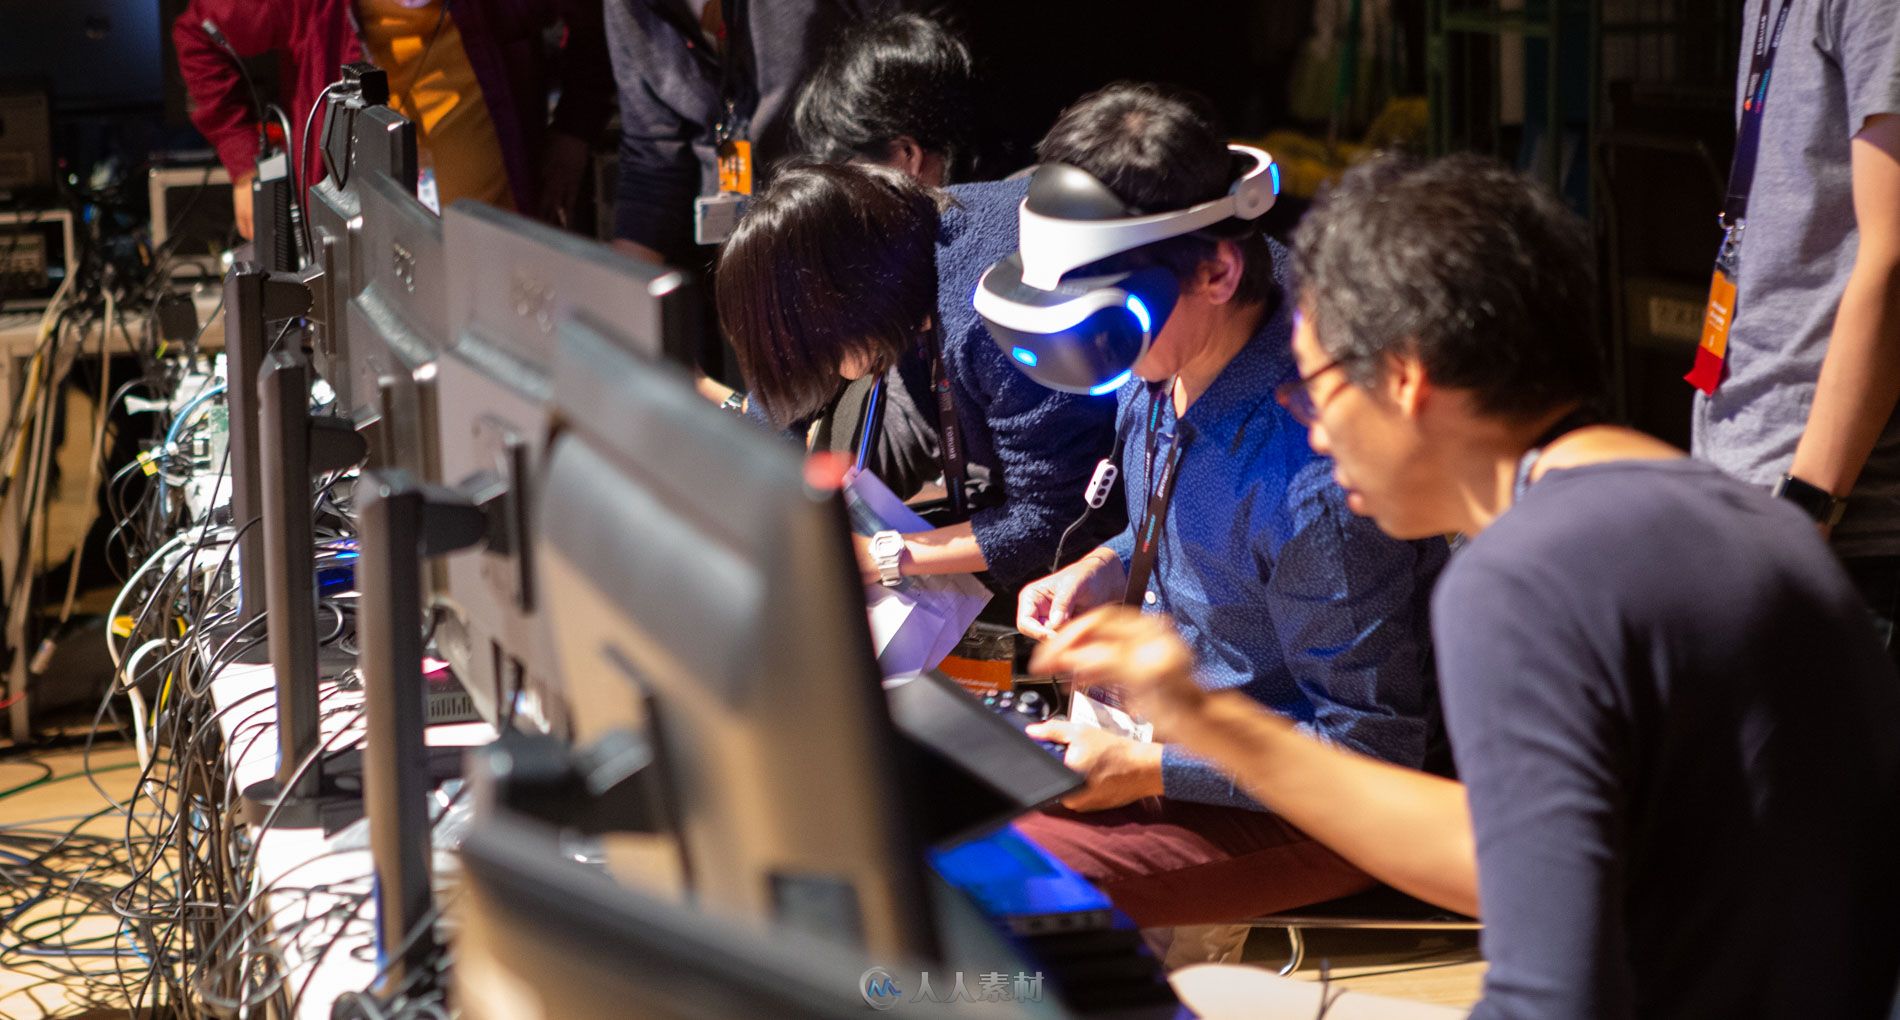 SIGGRAPH亚洲大会上的八款实时直播技术展示 都是让人眼前一亮的技术